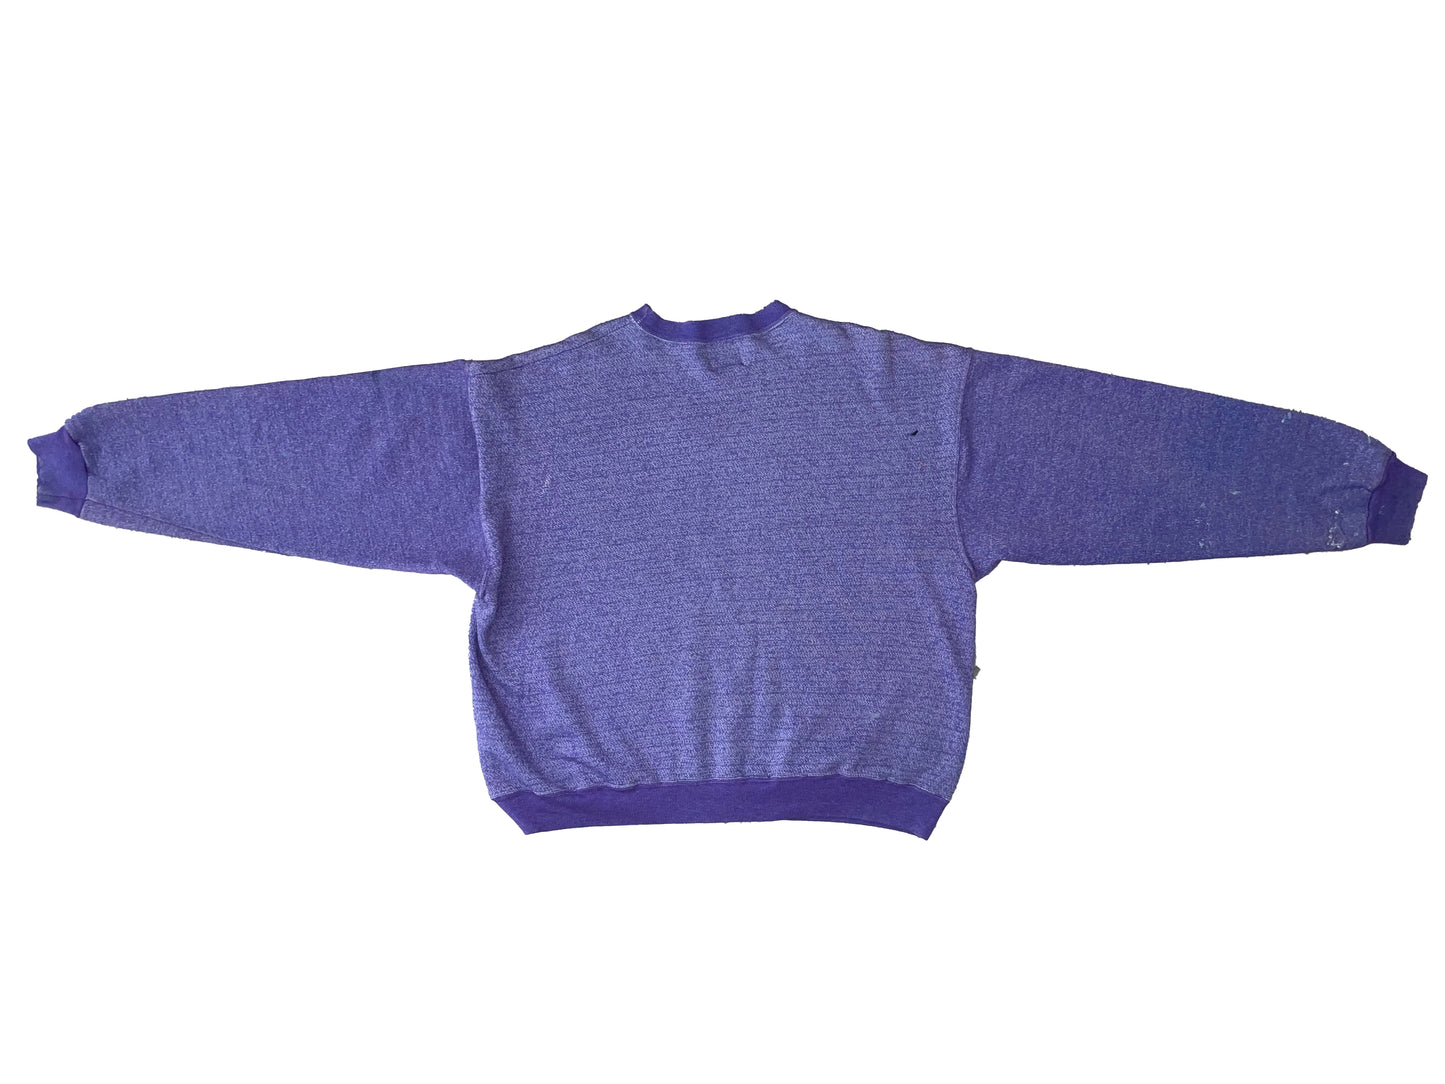 Jacksonville Jaguars purple banned logo sweatshirt size LARGE